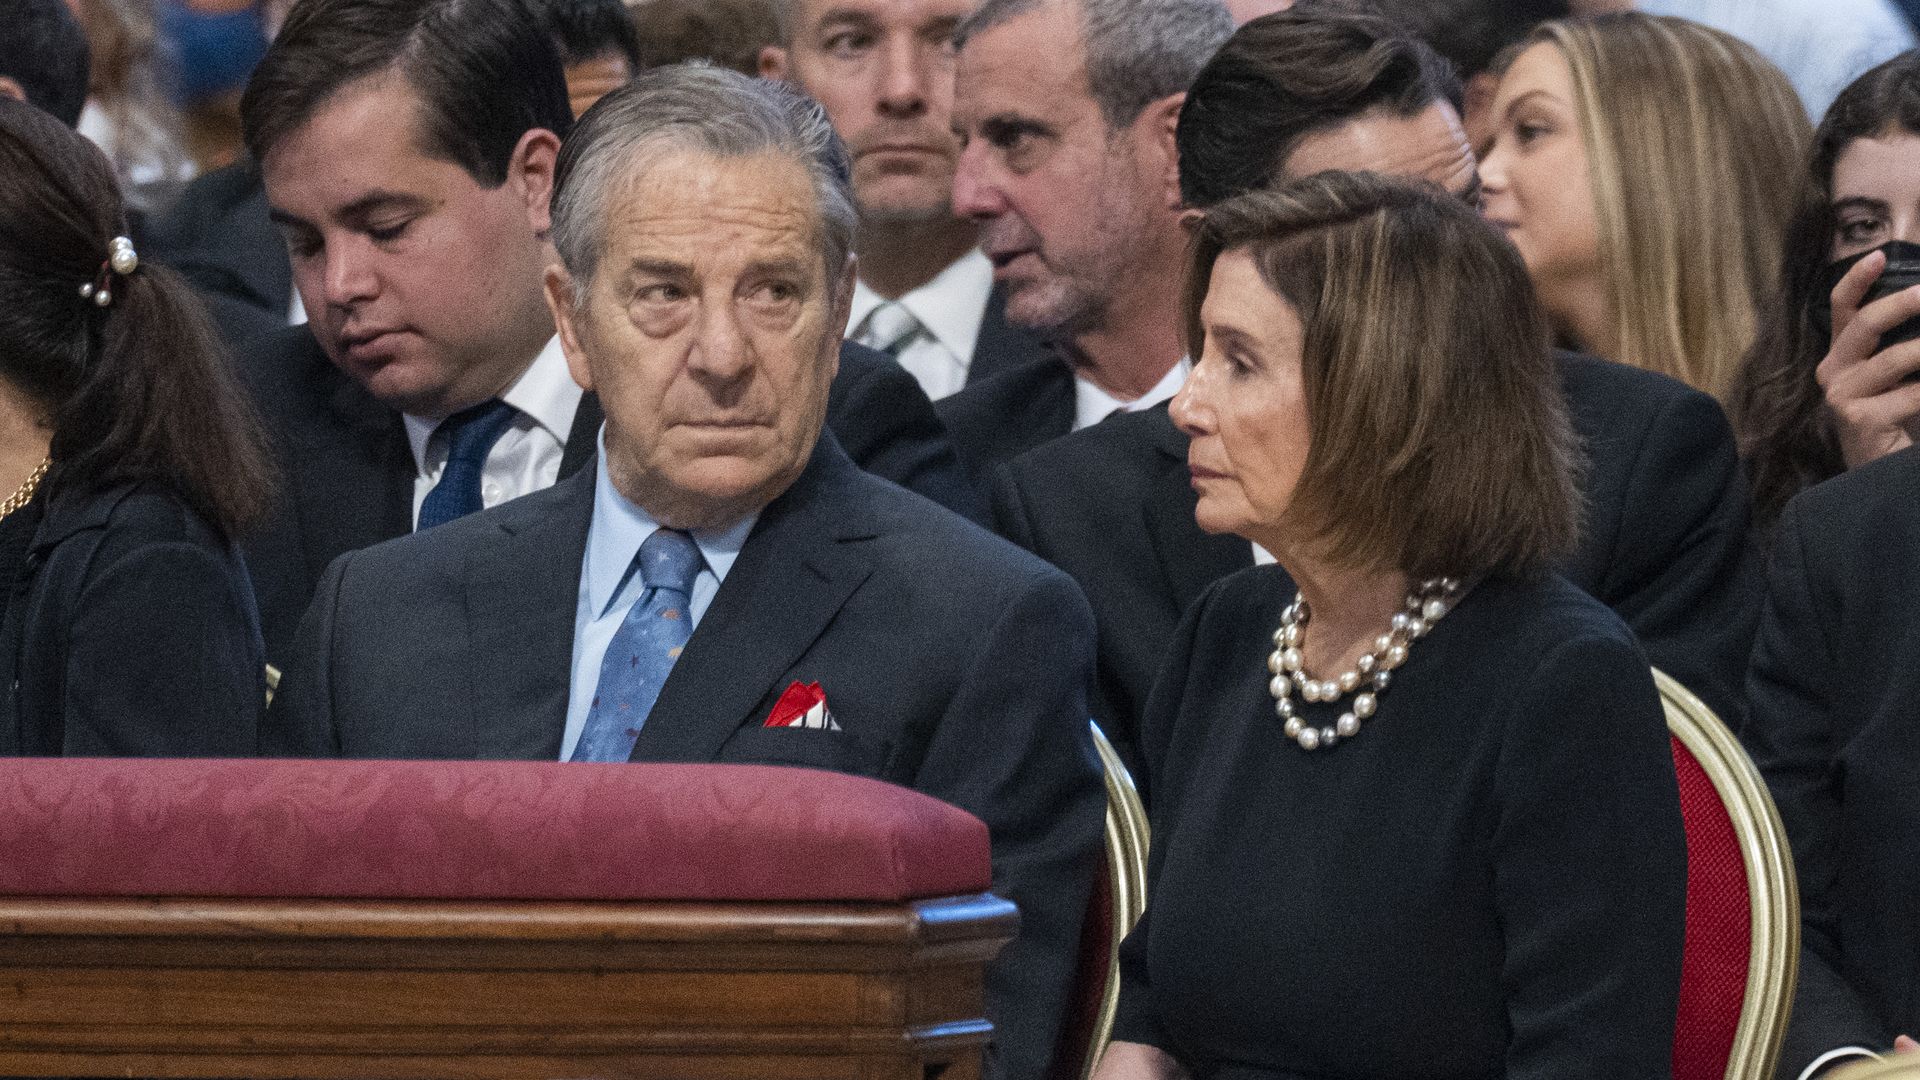 Paul Pelosi and Nancy